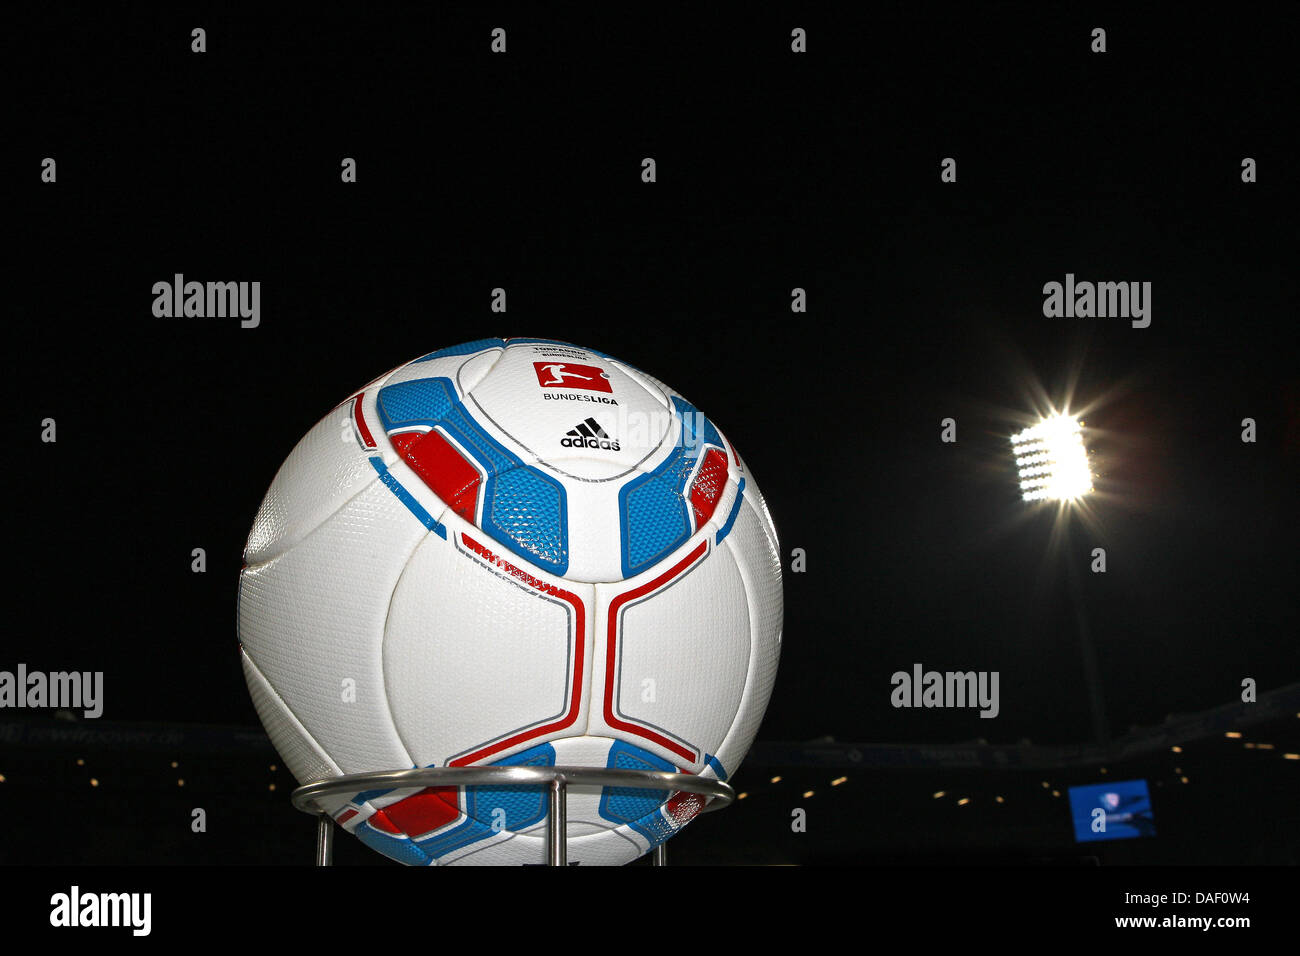 Soccer Ball Adidas Torfabrik High Resolution Stock Photography and Images -  Alamy